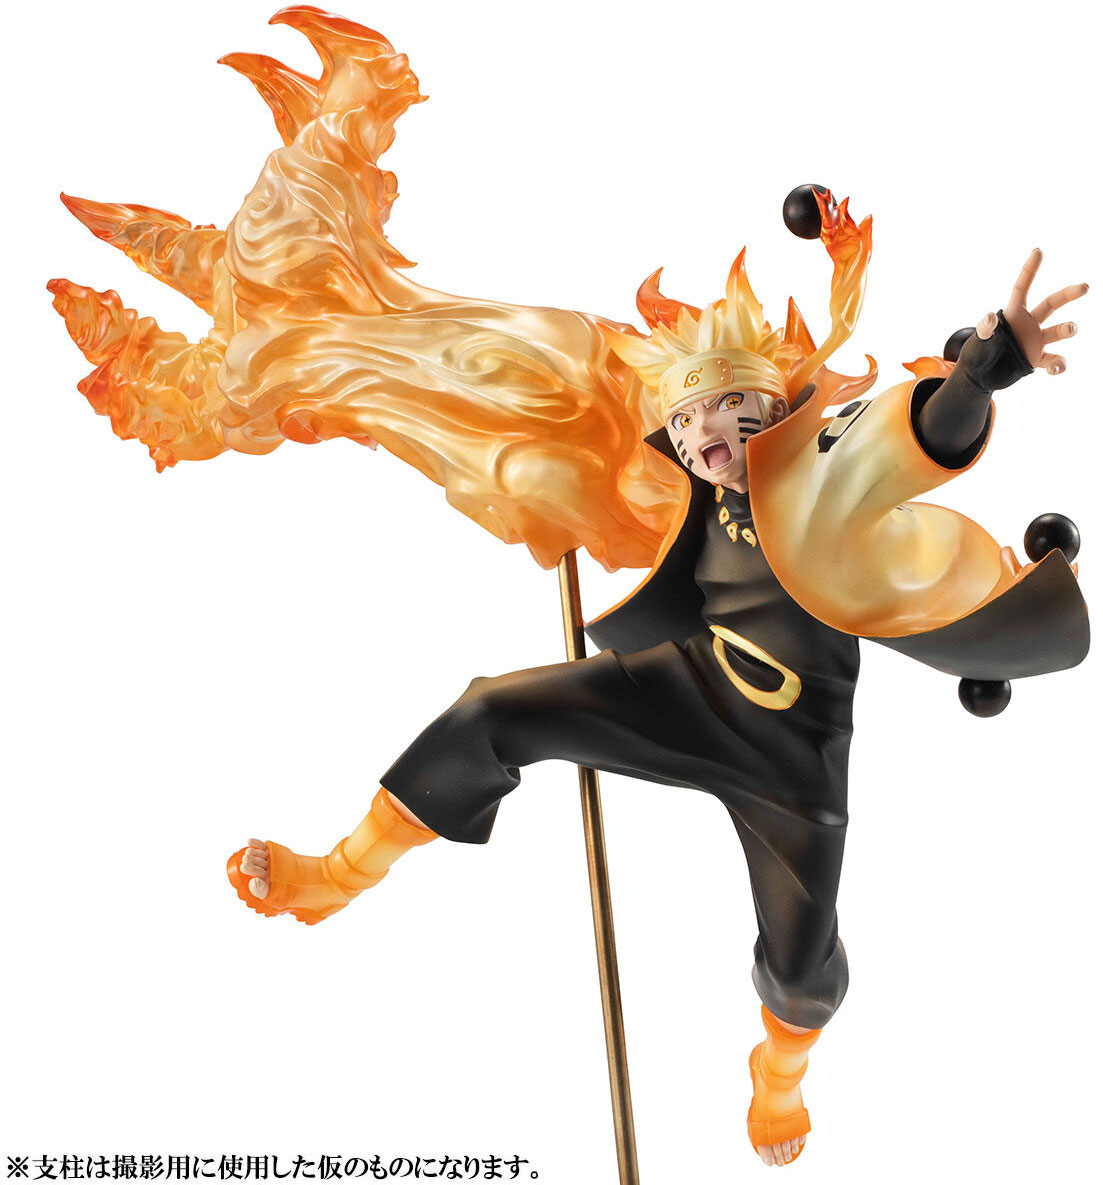 Naruto Uzumaki The Six Paths Sage Mode G.E.M.15th Anniversary Ver. Figure PREMIUM BANDAI